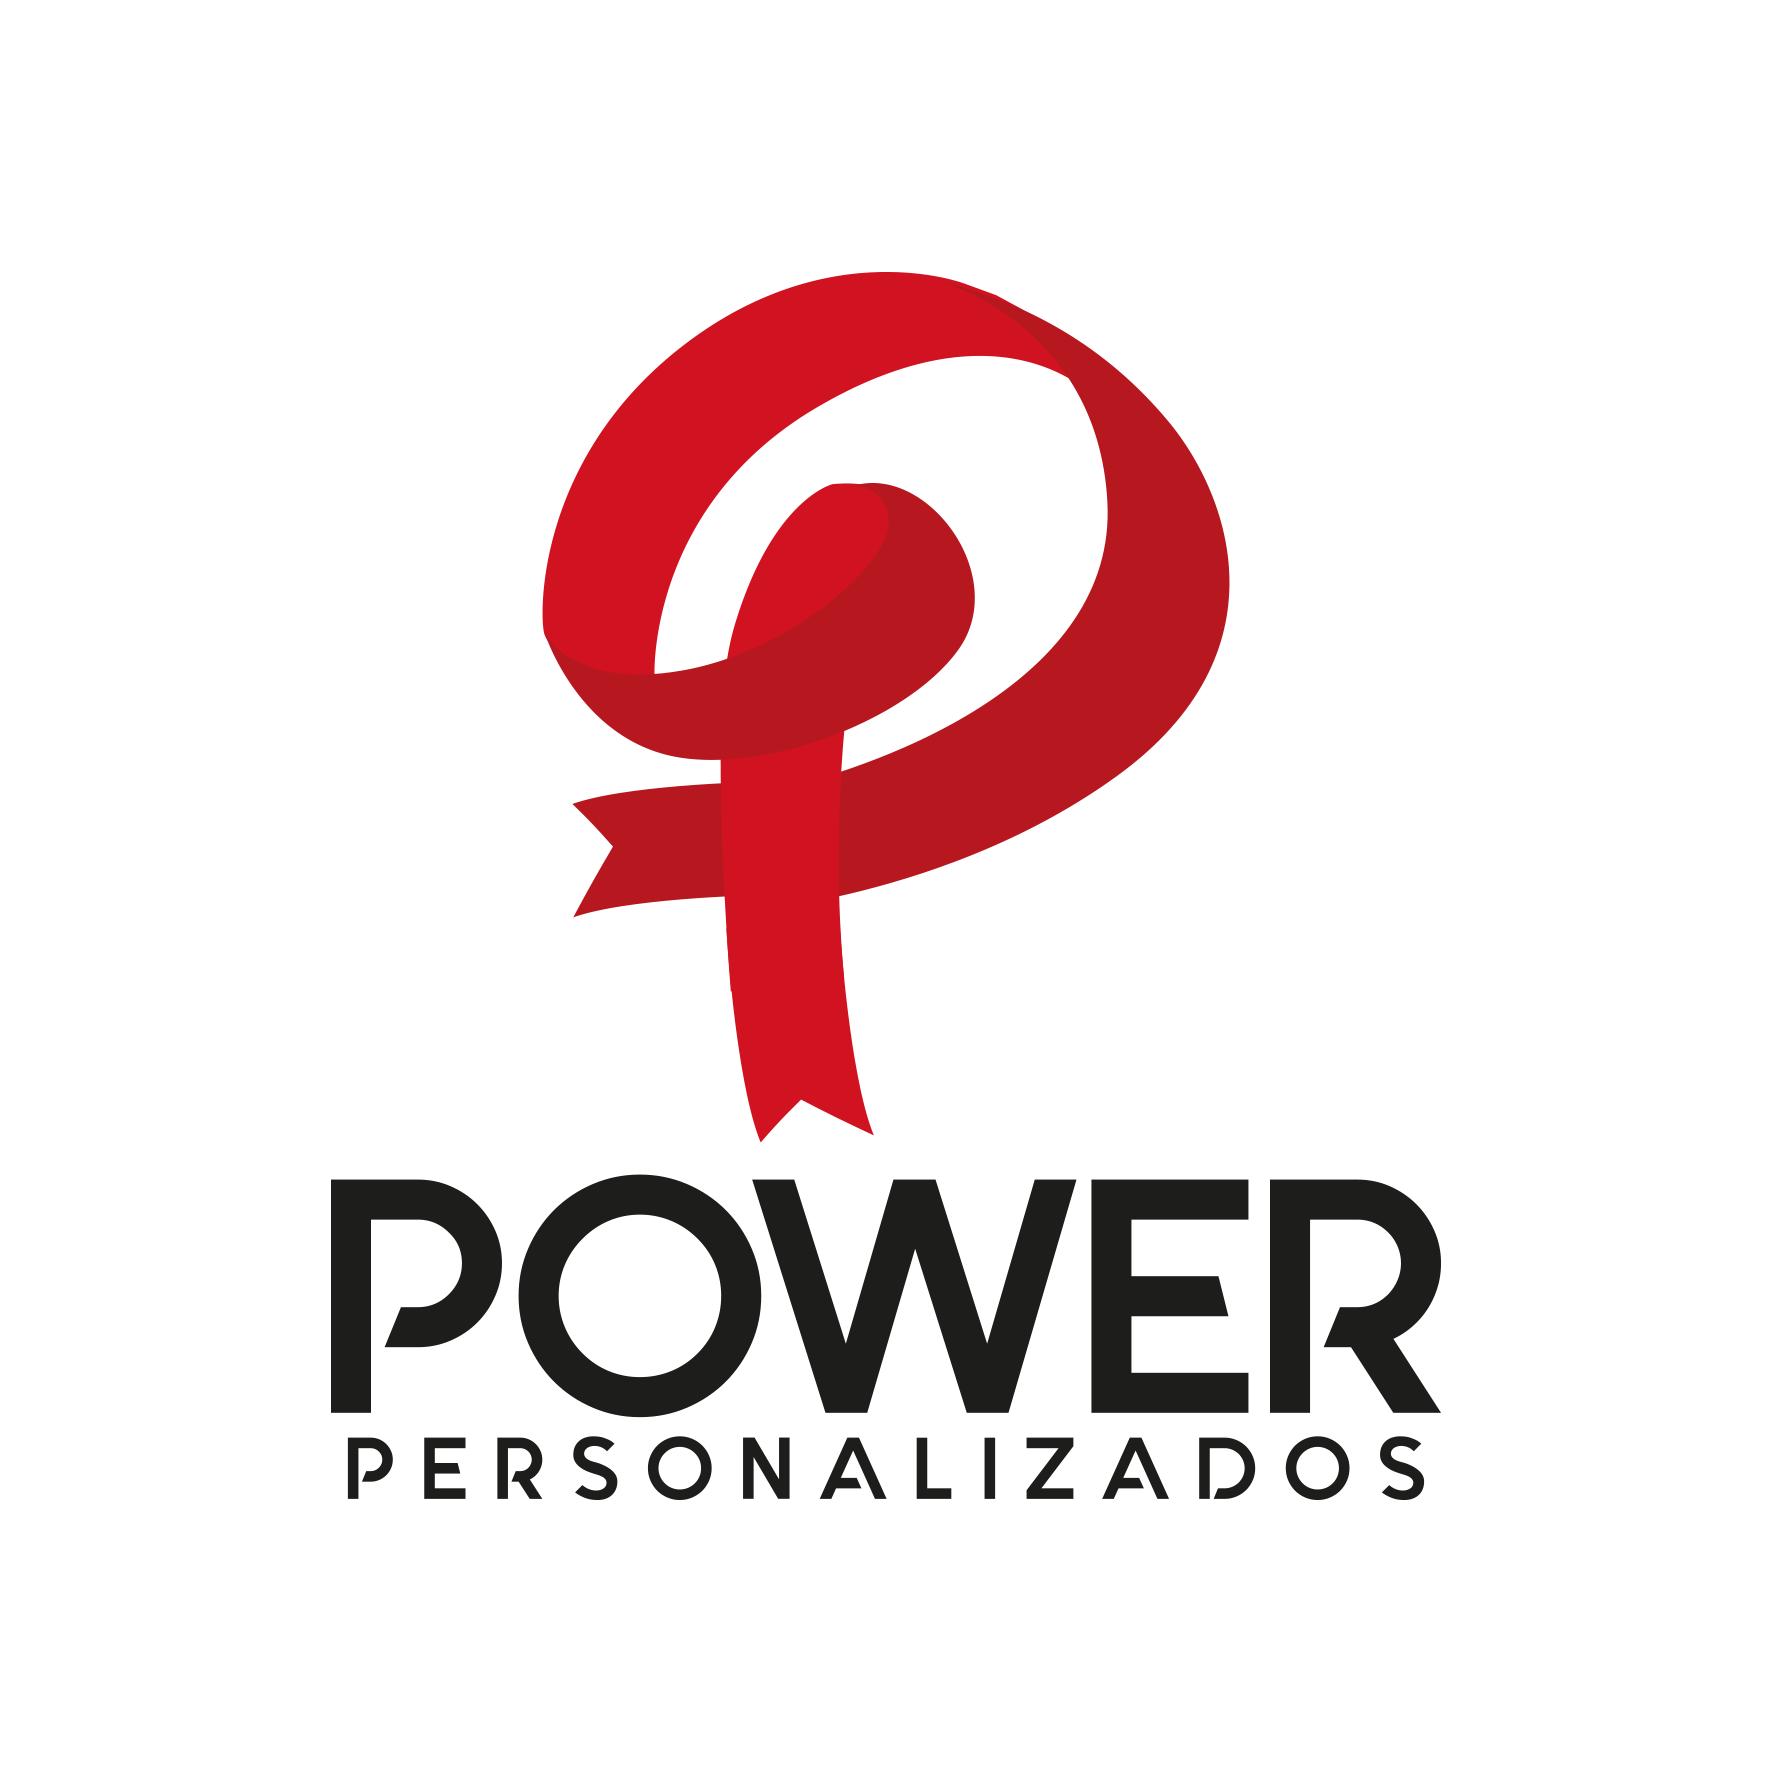 Power Personalizados